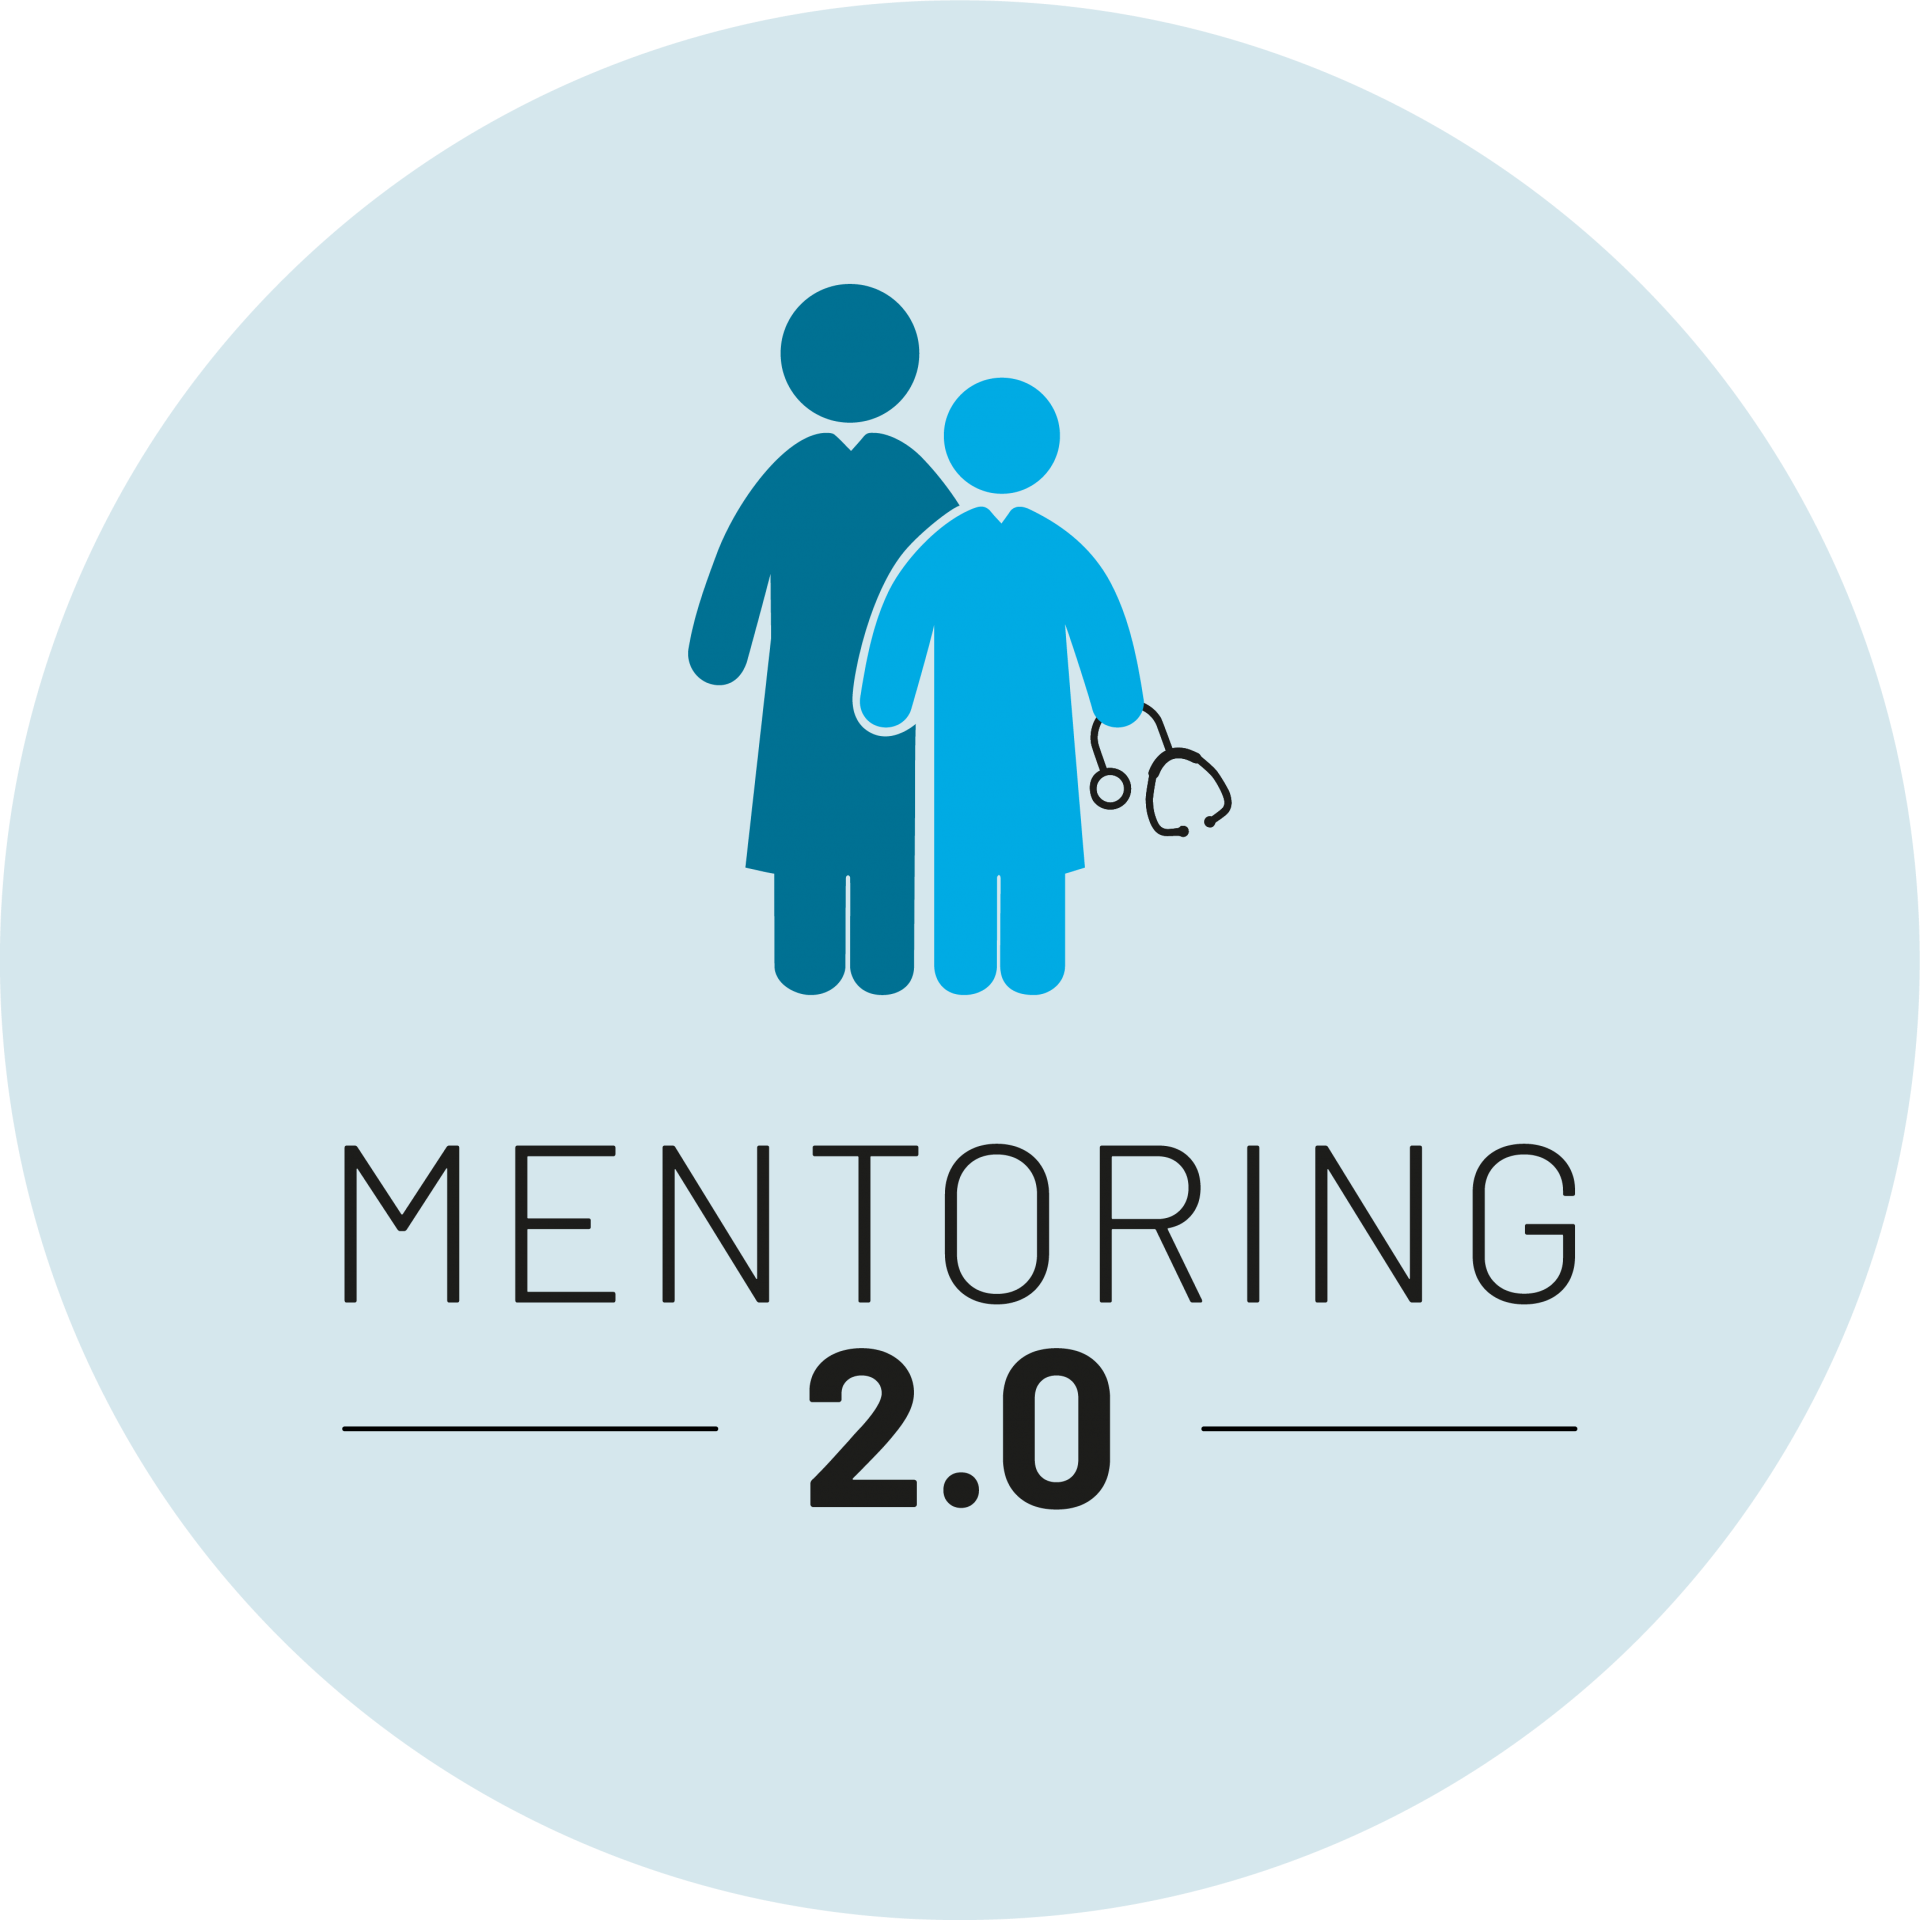 Logotipo Projeto Mentoring